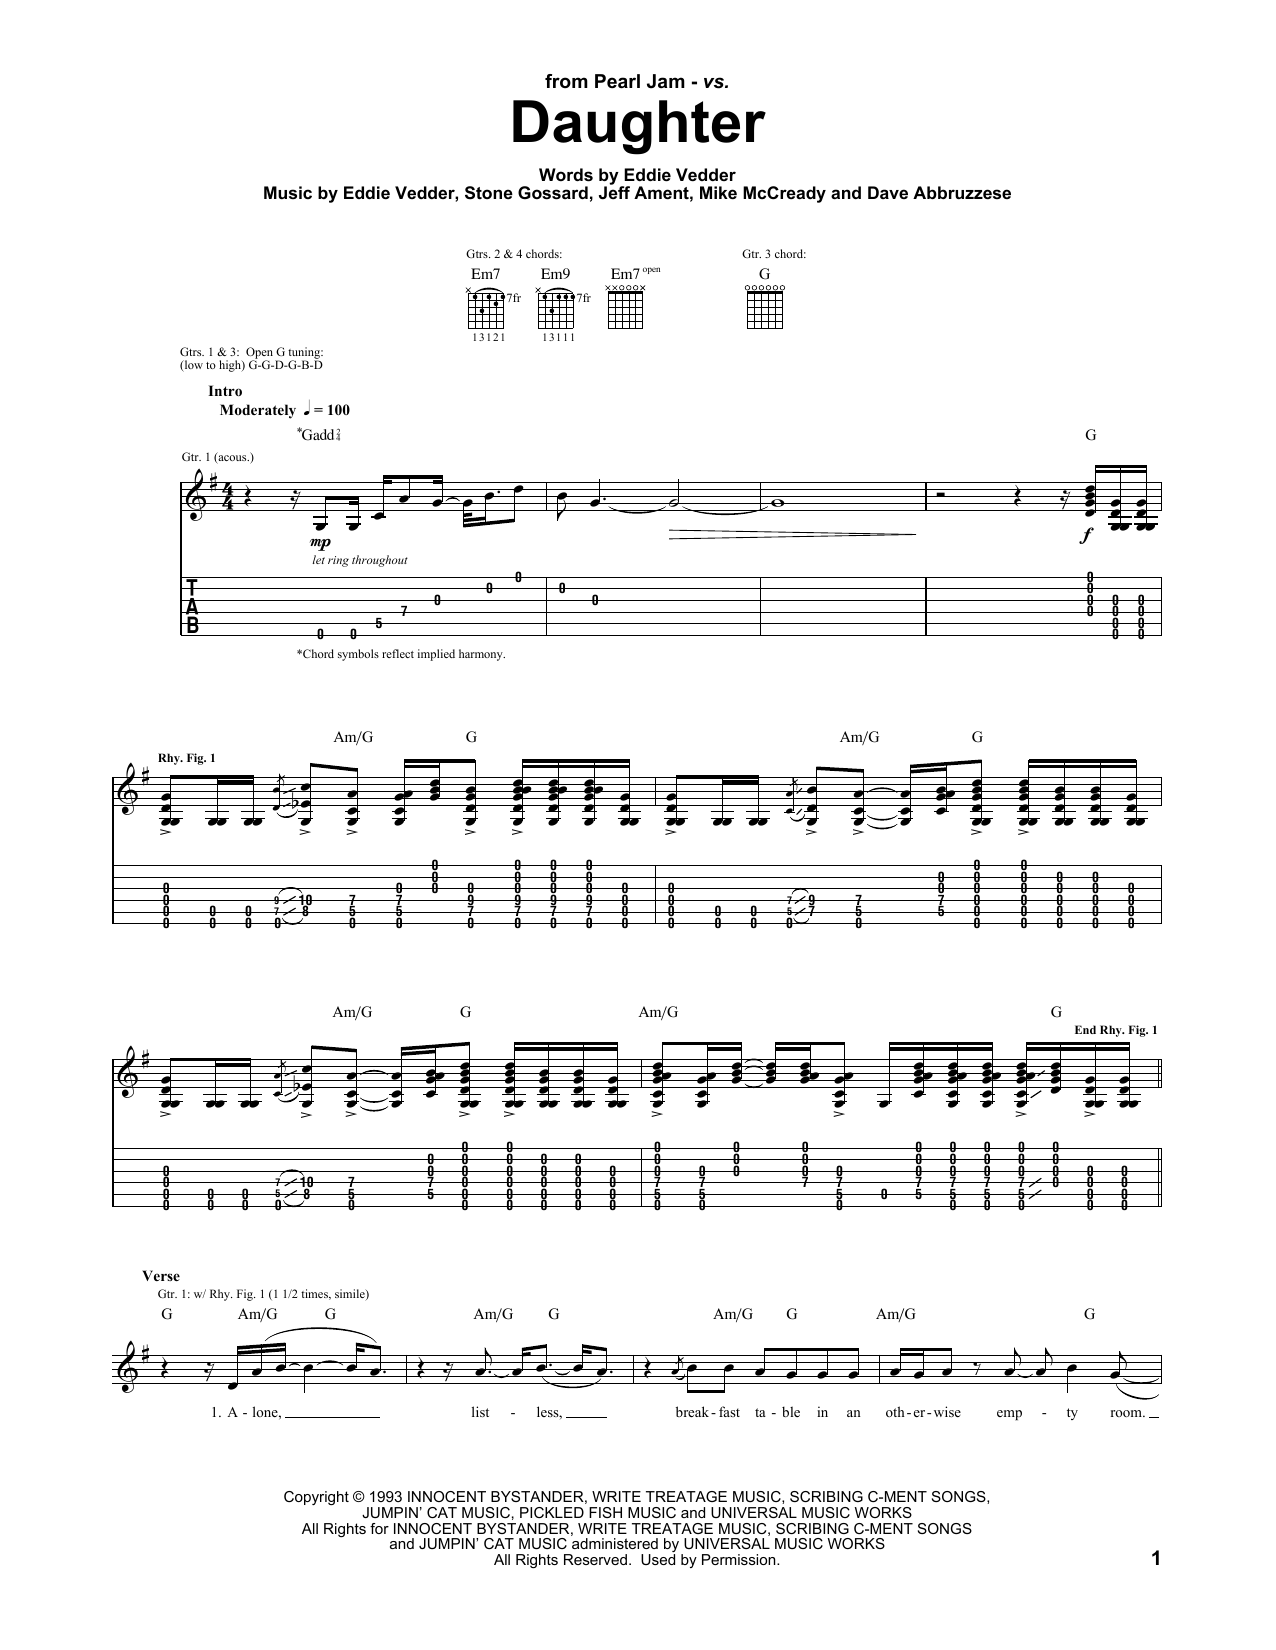 Pearl Jam Daughter Sheet Music Notes & Chords for Guitar Lead Sheet - Download or Print PDF